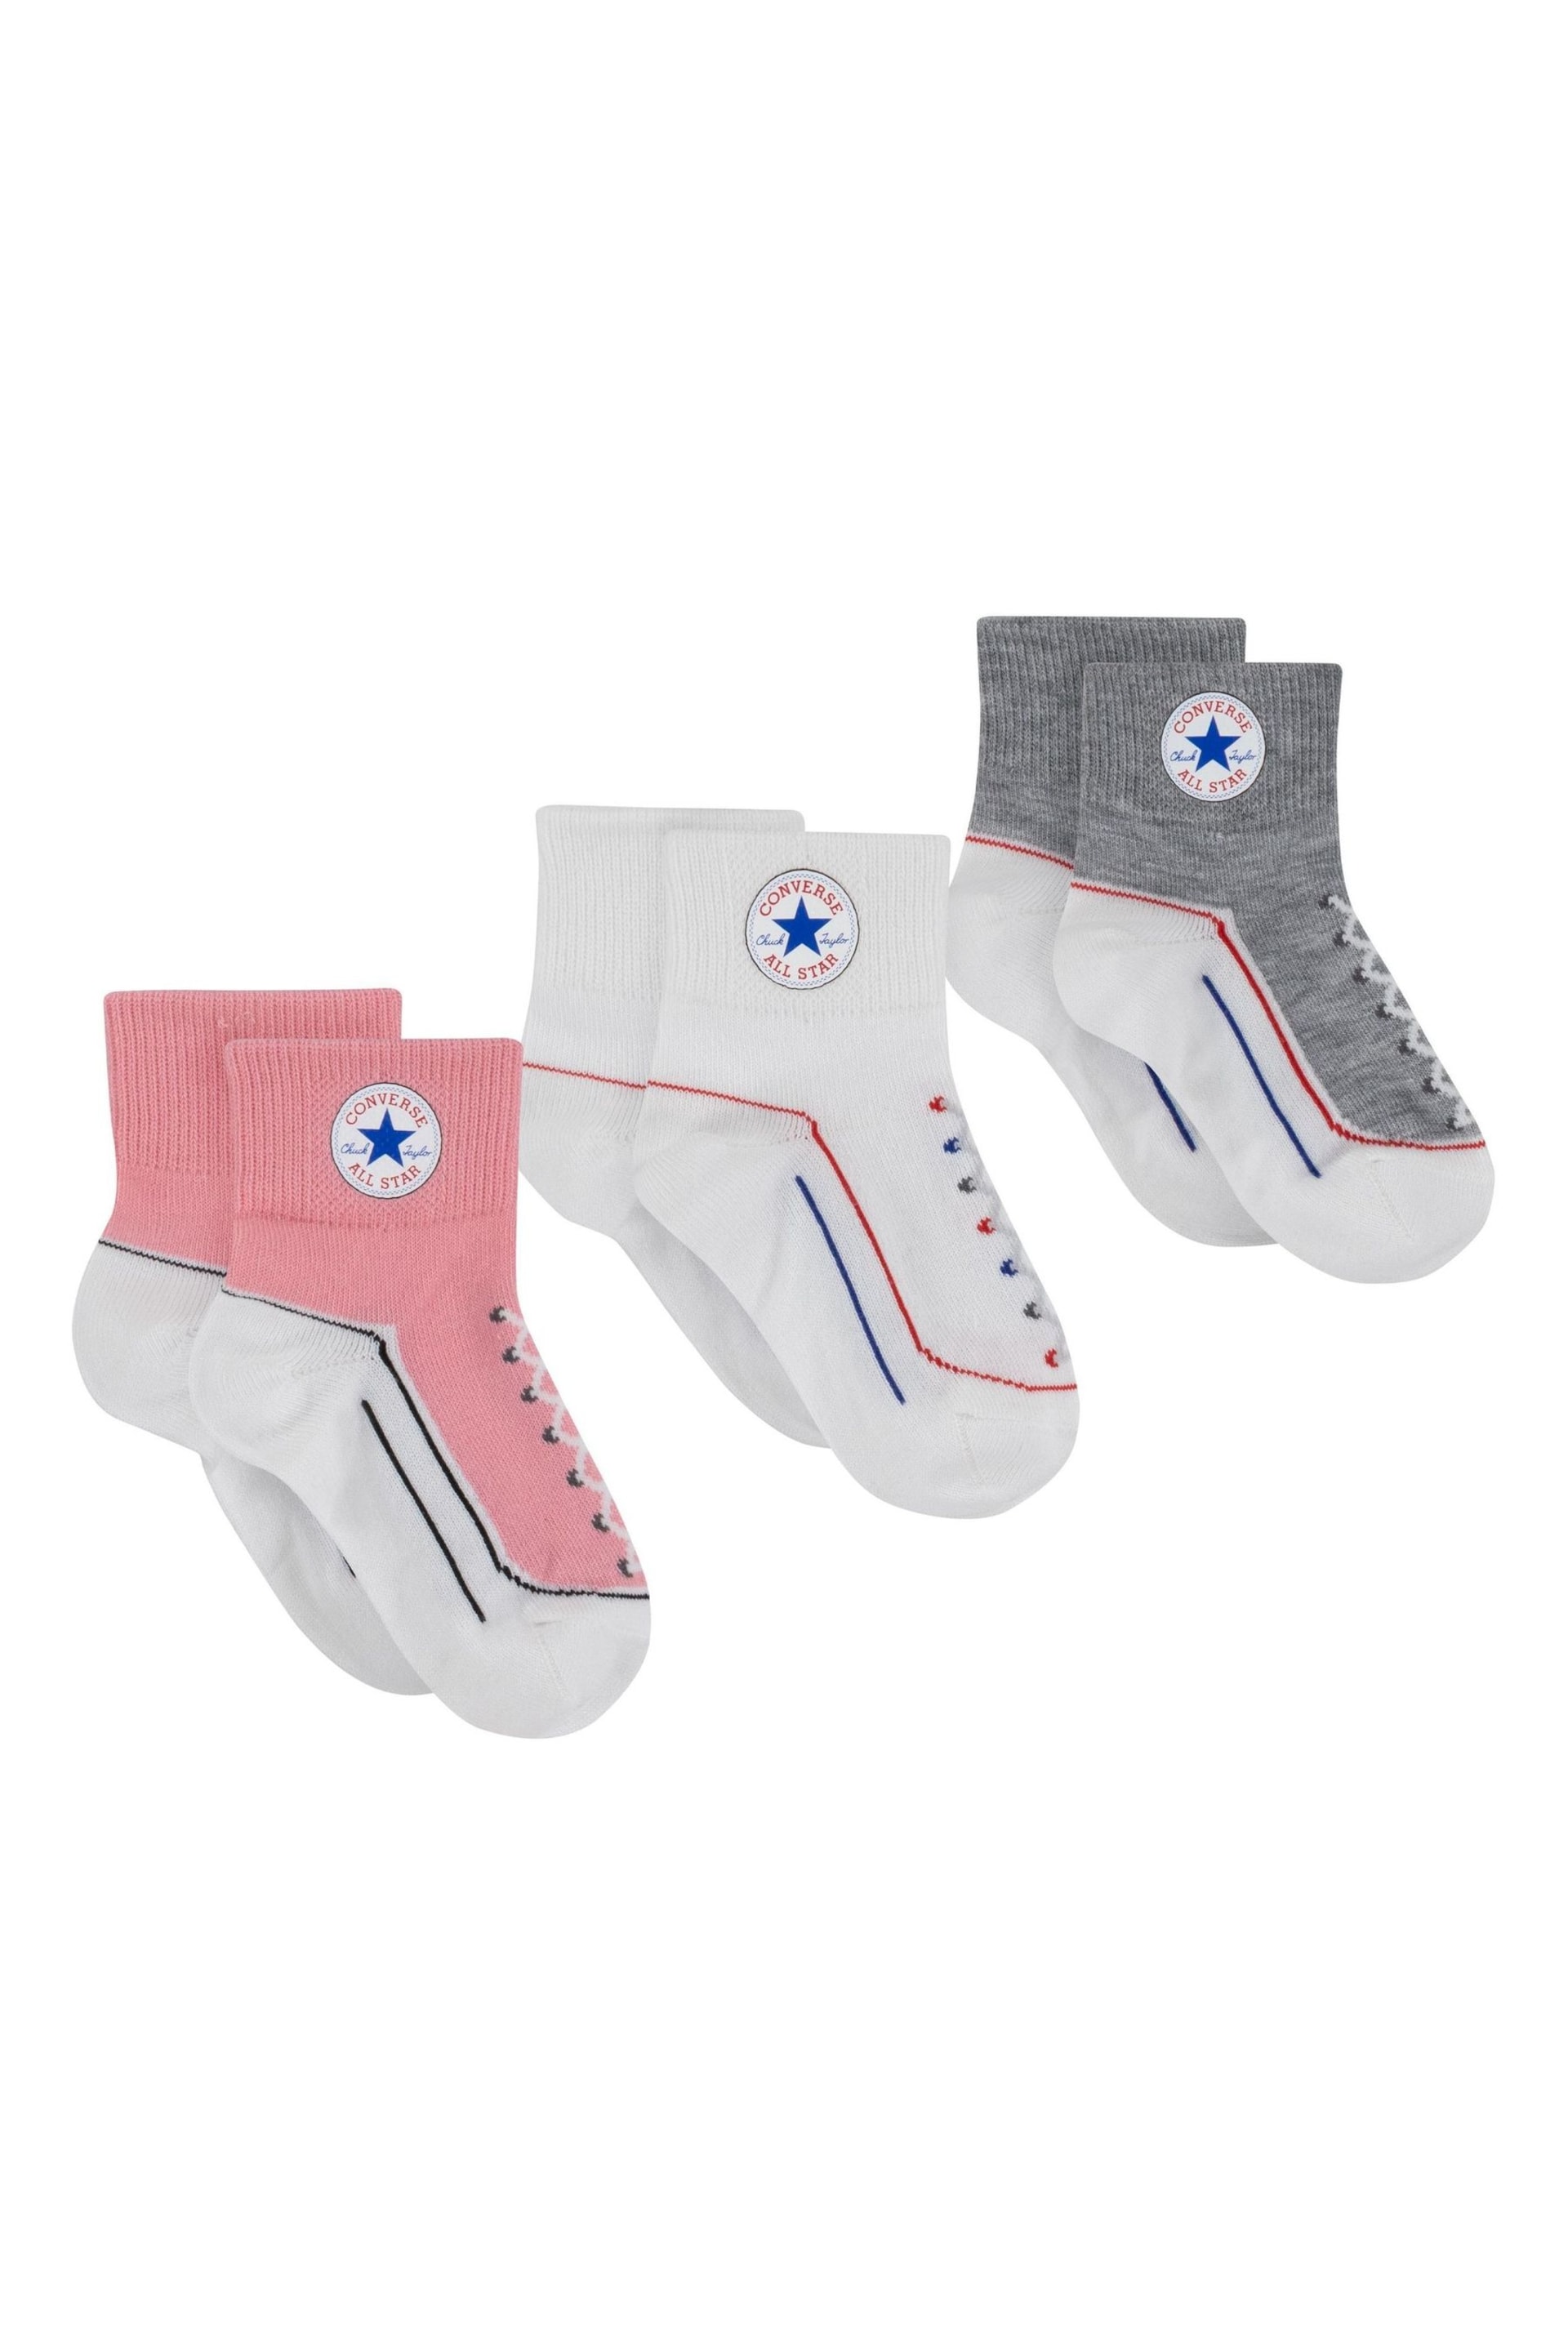 Converse Light Pink Infant Straited Socks 3 Pack - Image 1 of 4